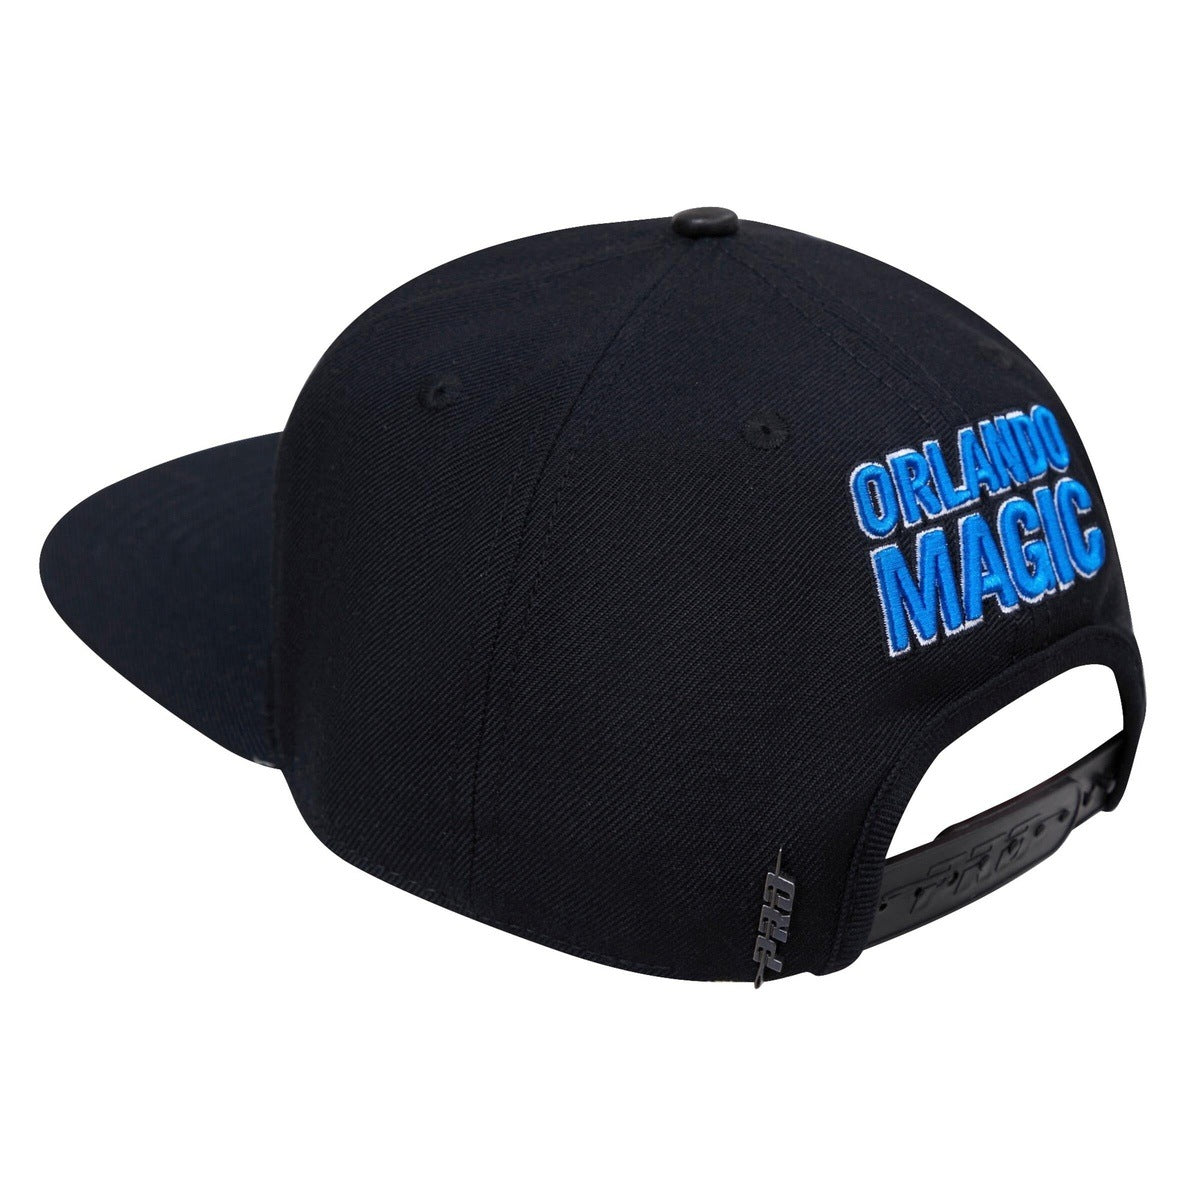 ORLANDO MAGIC RETRO CLASSIC LOGO WOOL SNAPBACK HAT (BLACK/GRAY)